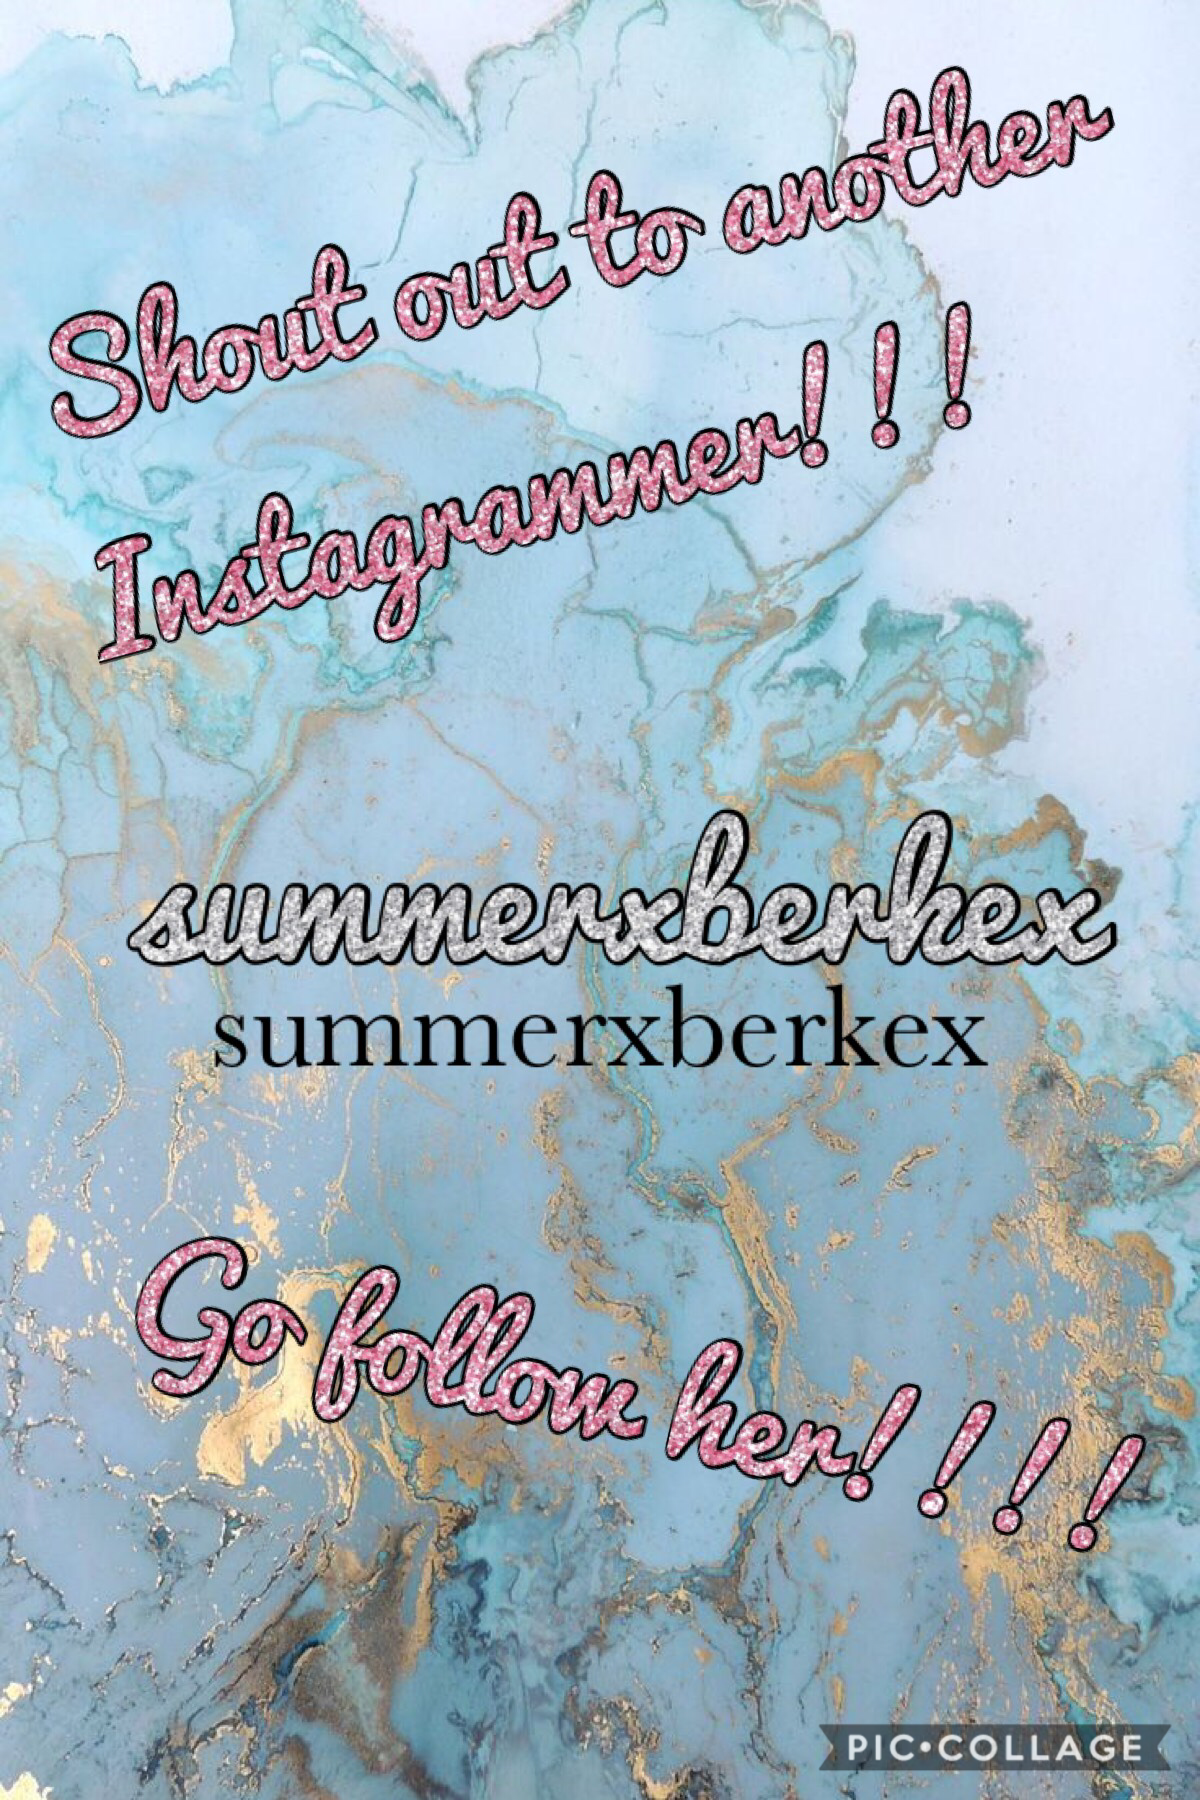 Please follow summerxberkex!!
X❤️